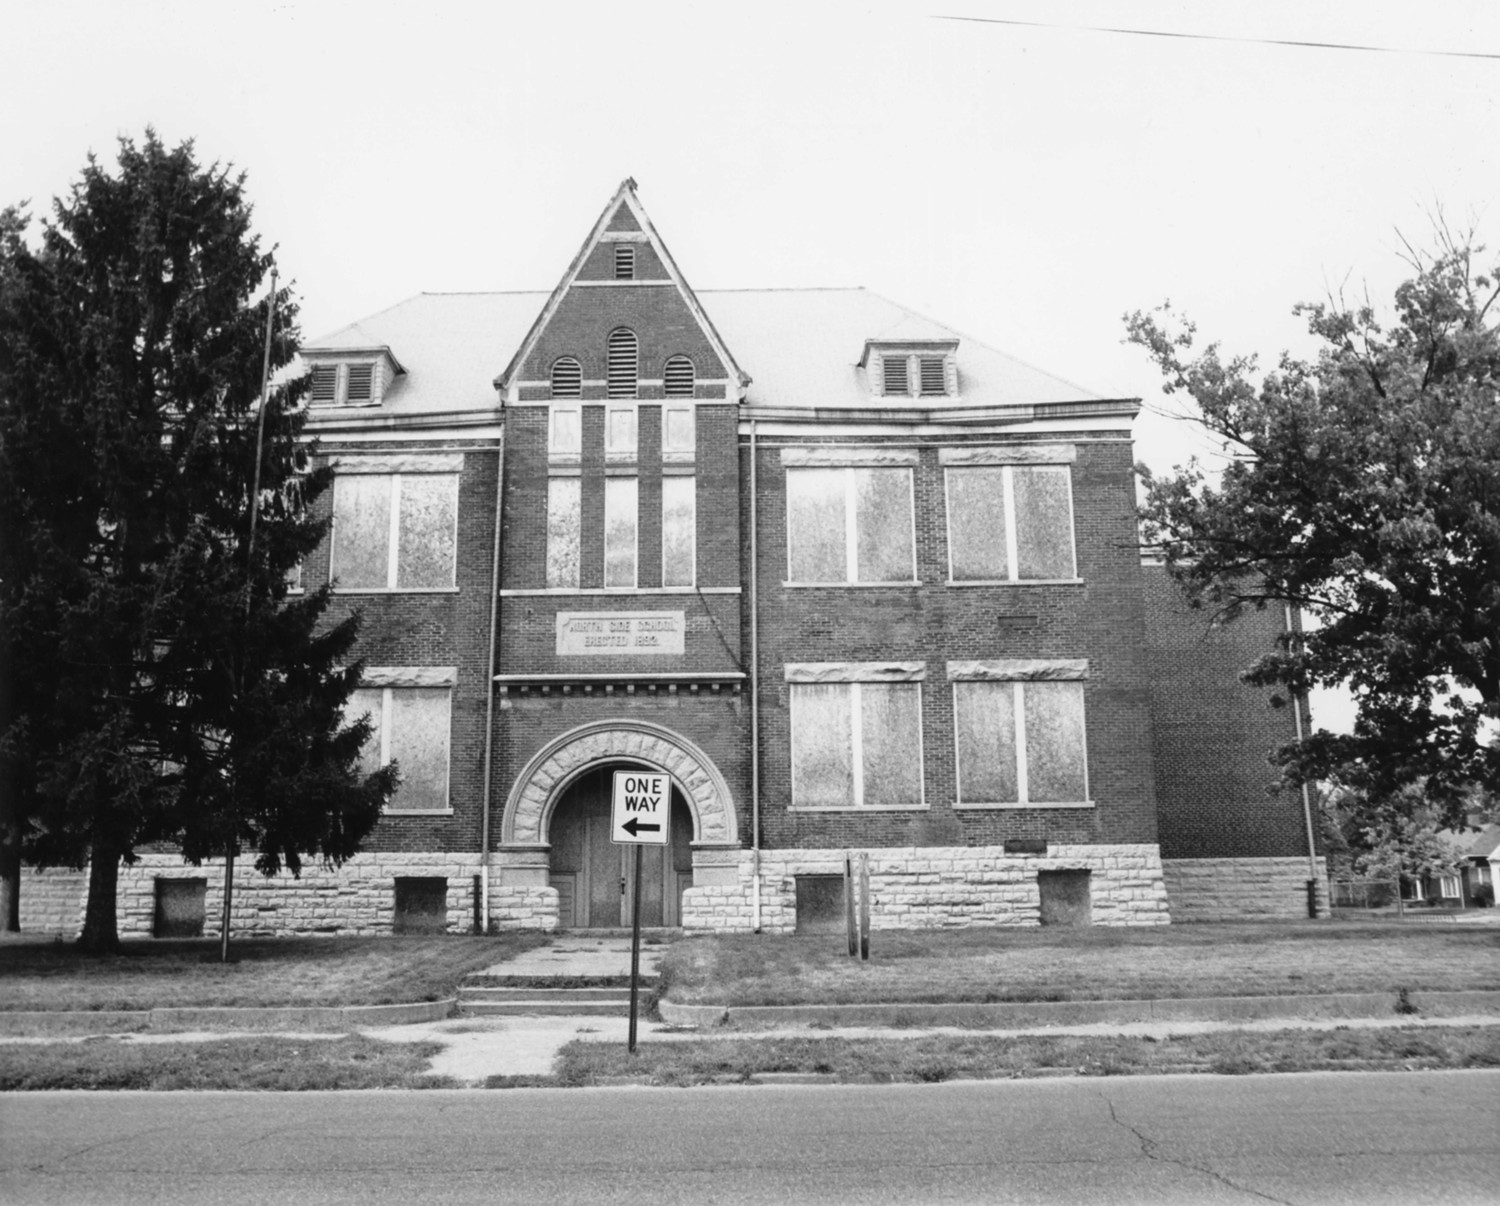 McKinley School - North Side School, Columbus Indiana Looking North (1987)